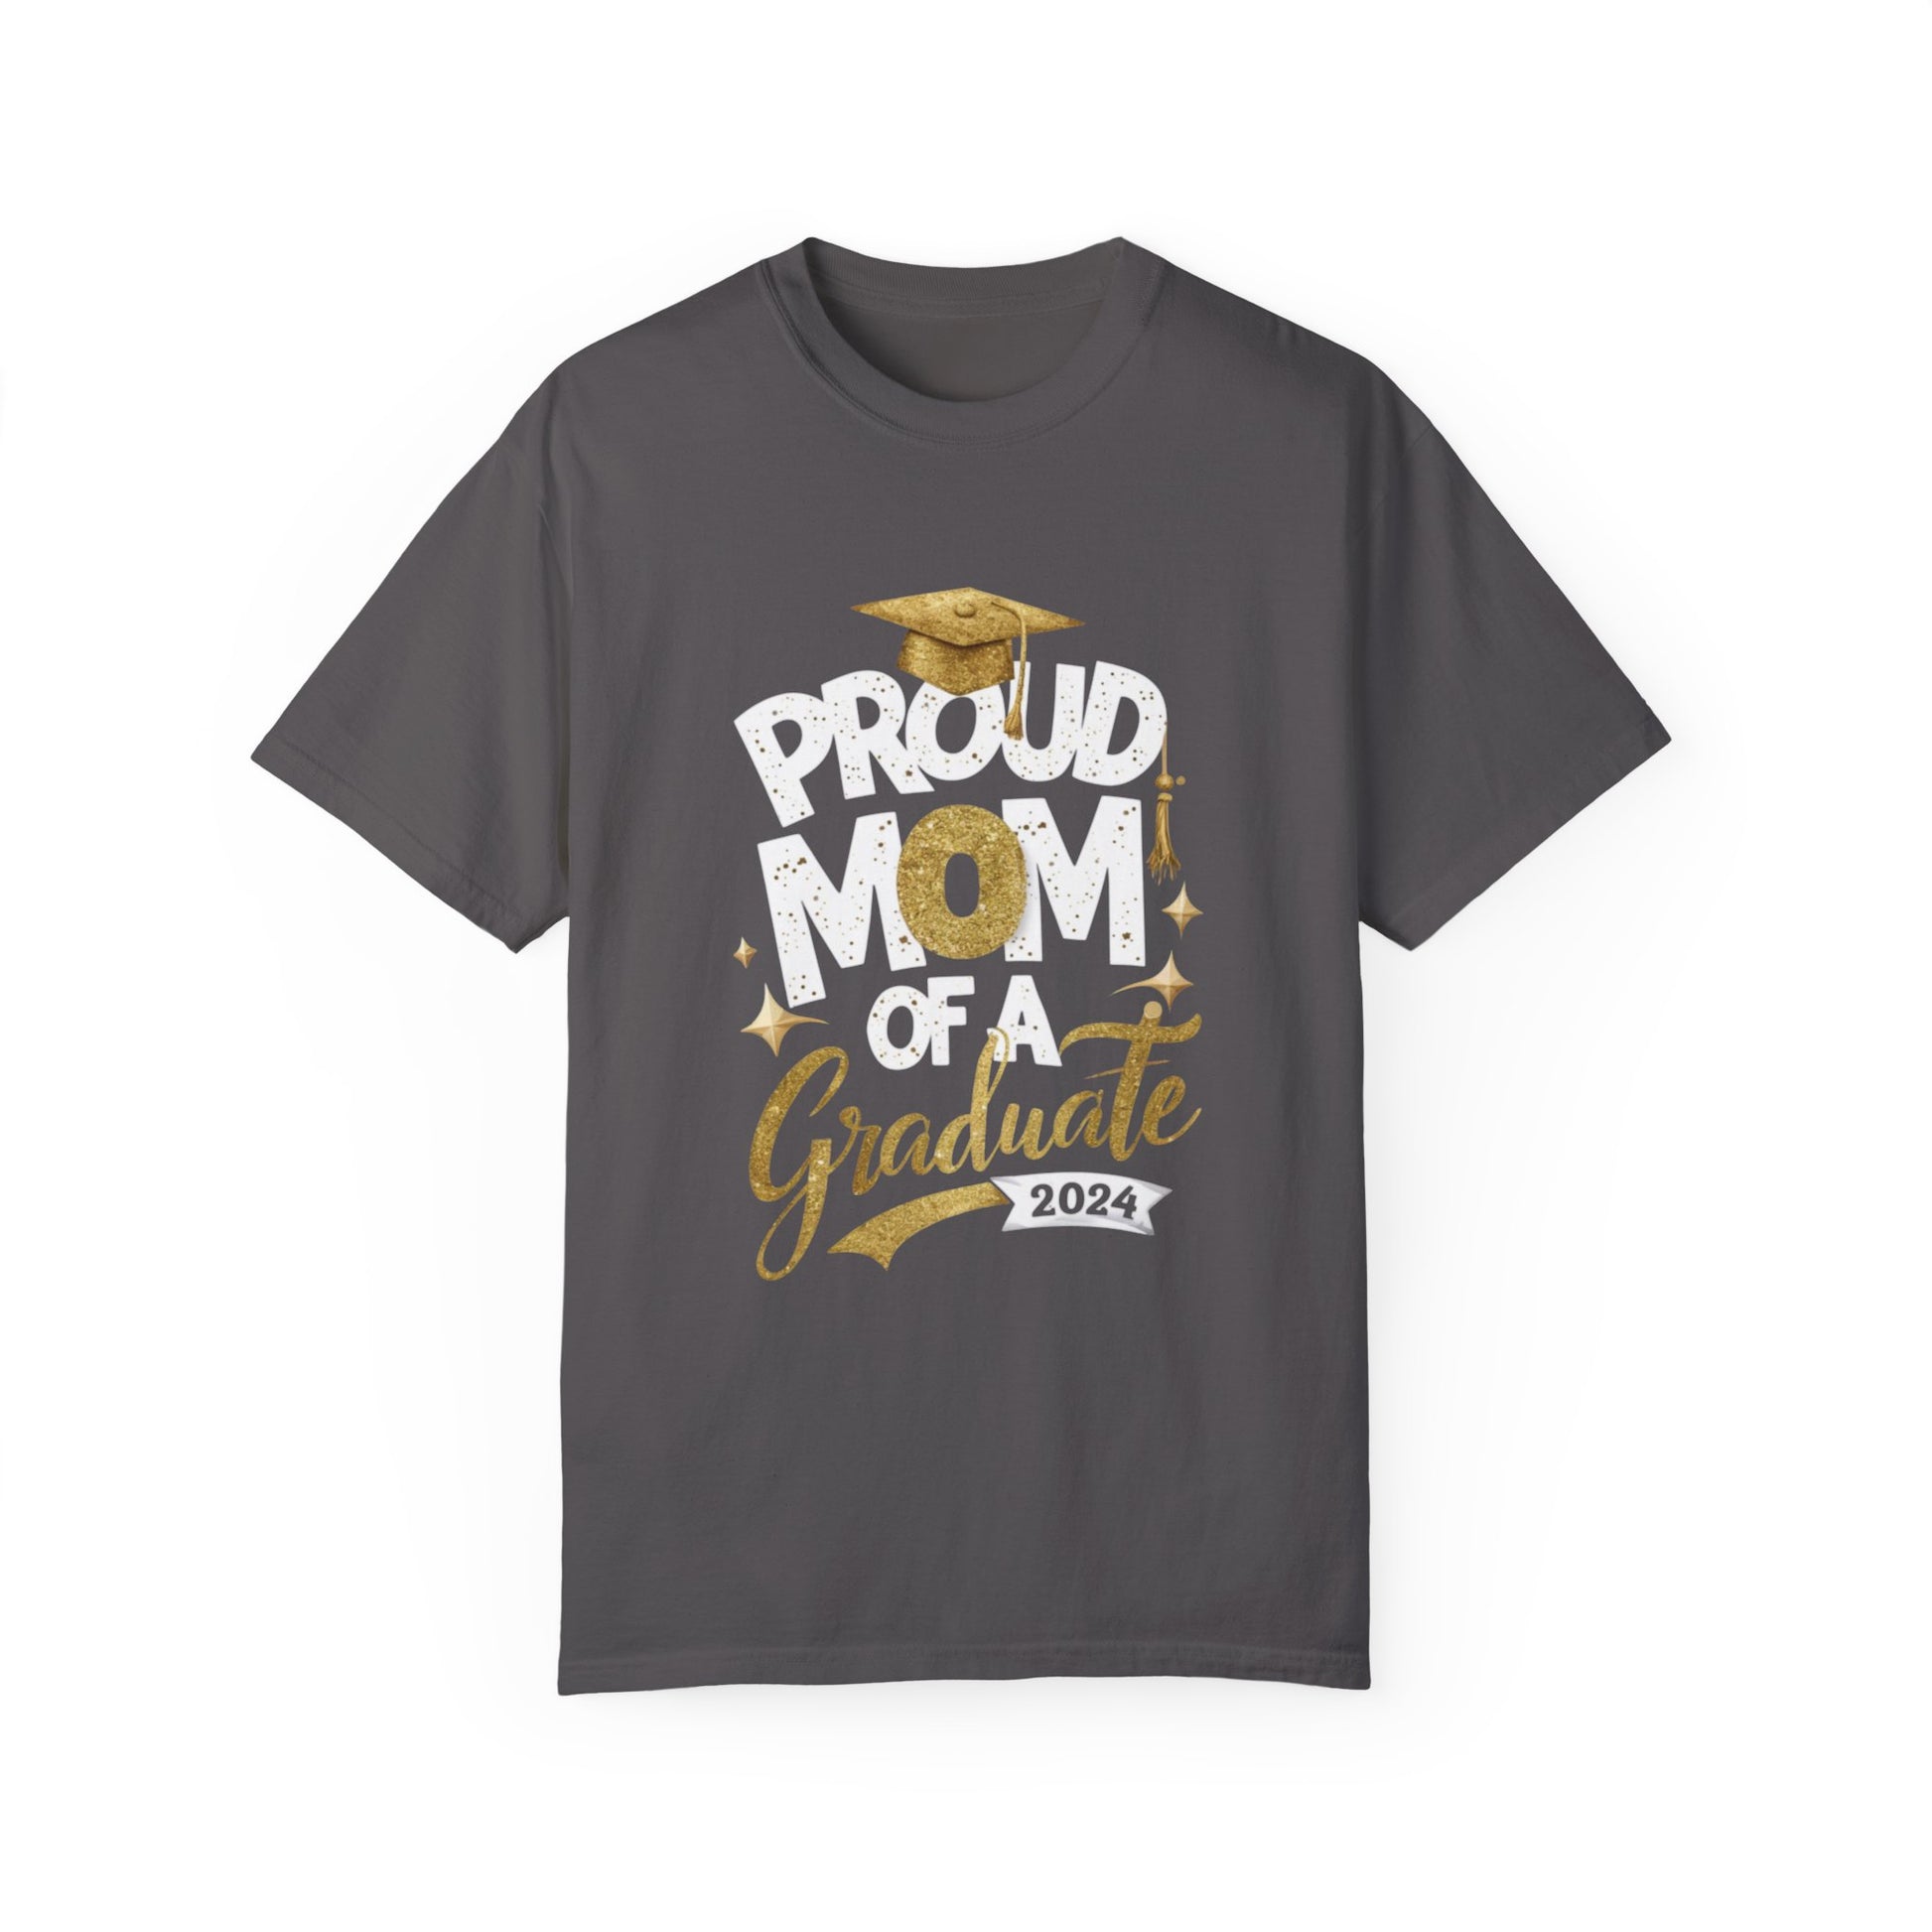 Proud Mom of a 2024 Graduate Unisex Garment-dyed T-shirt Cotton Funny Humorous Graphic Soft Premium Unisex Men Women Graphite T-shirt Birthday Gift-8